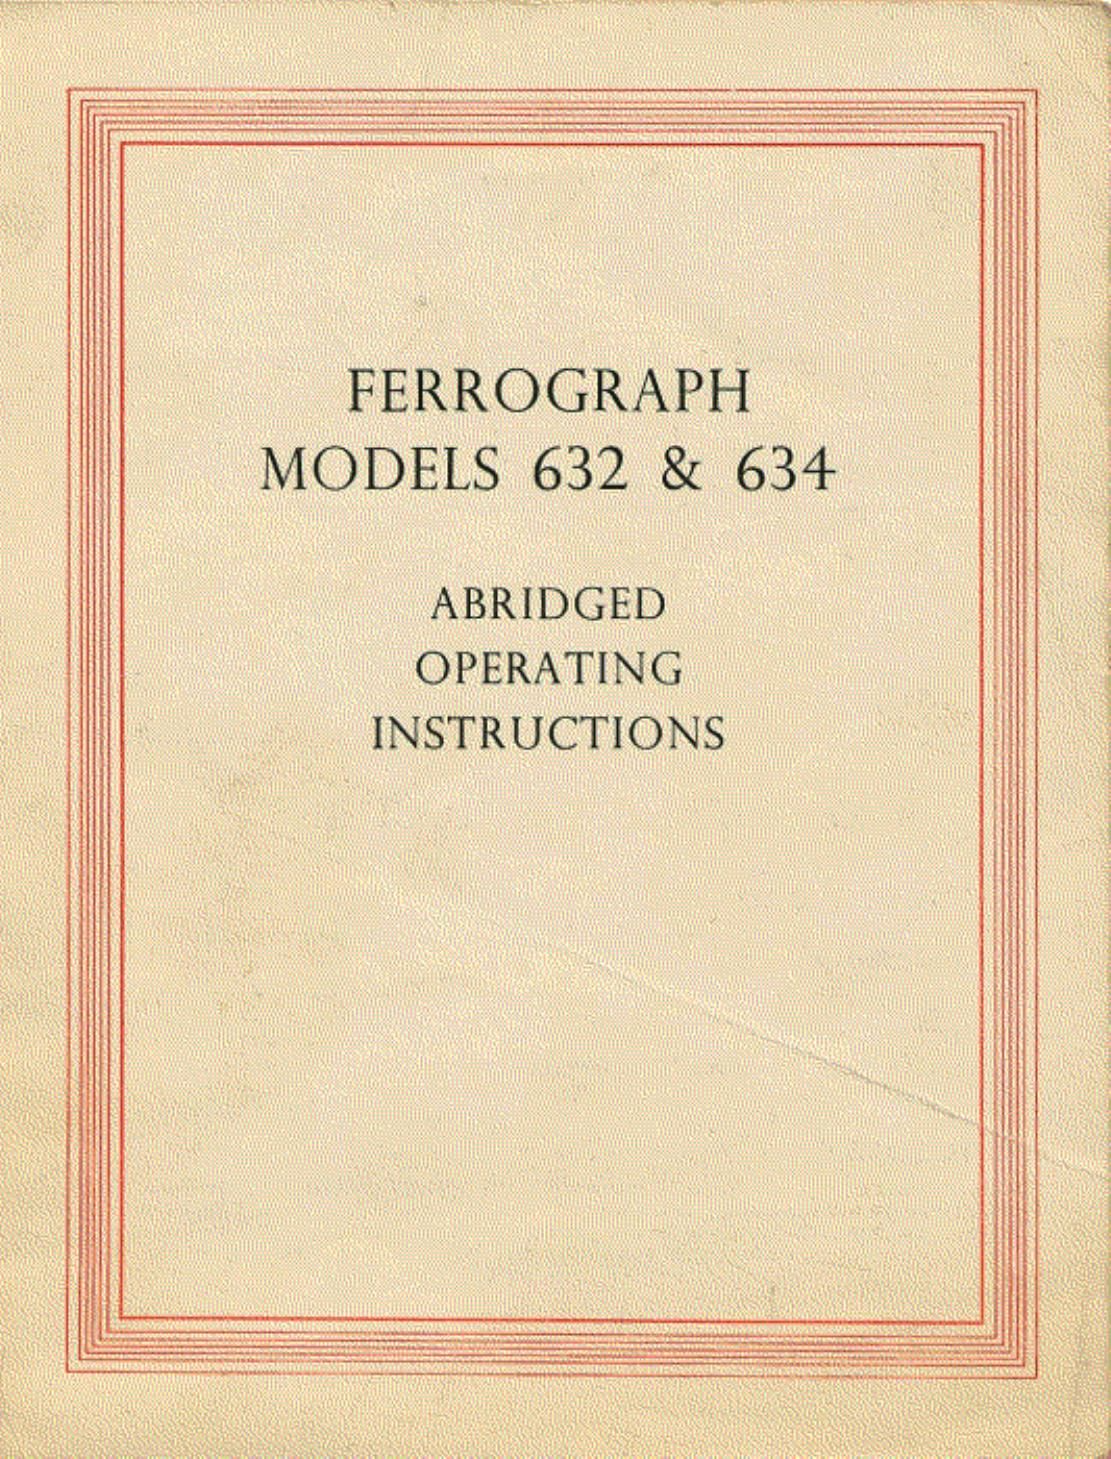 Ferrograph 634 Owners Manual